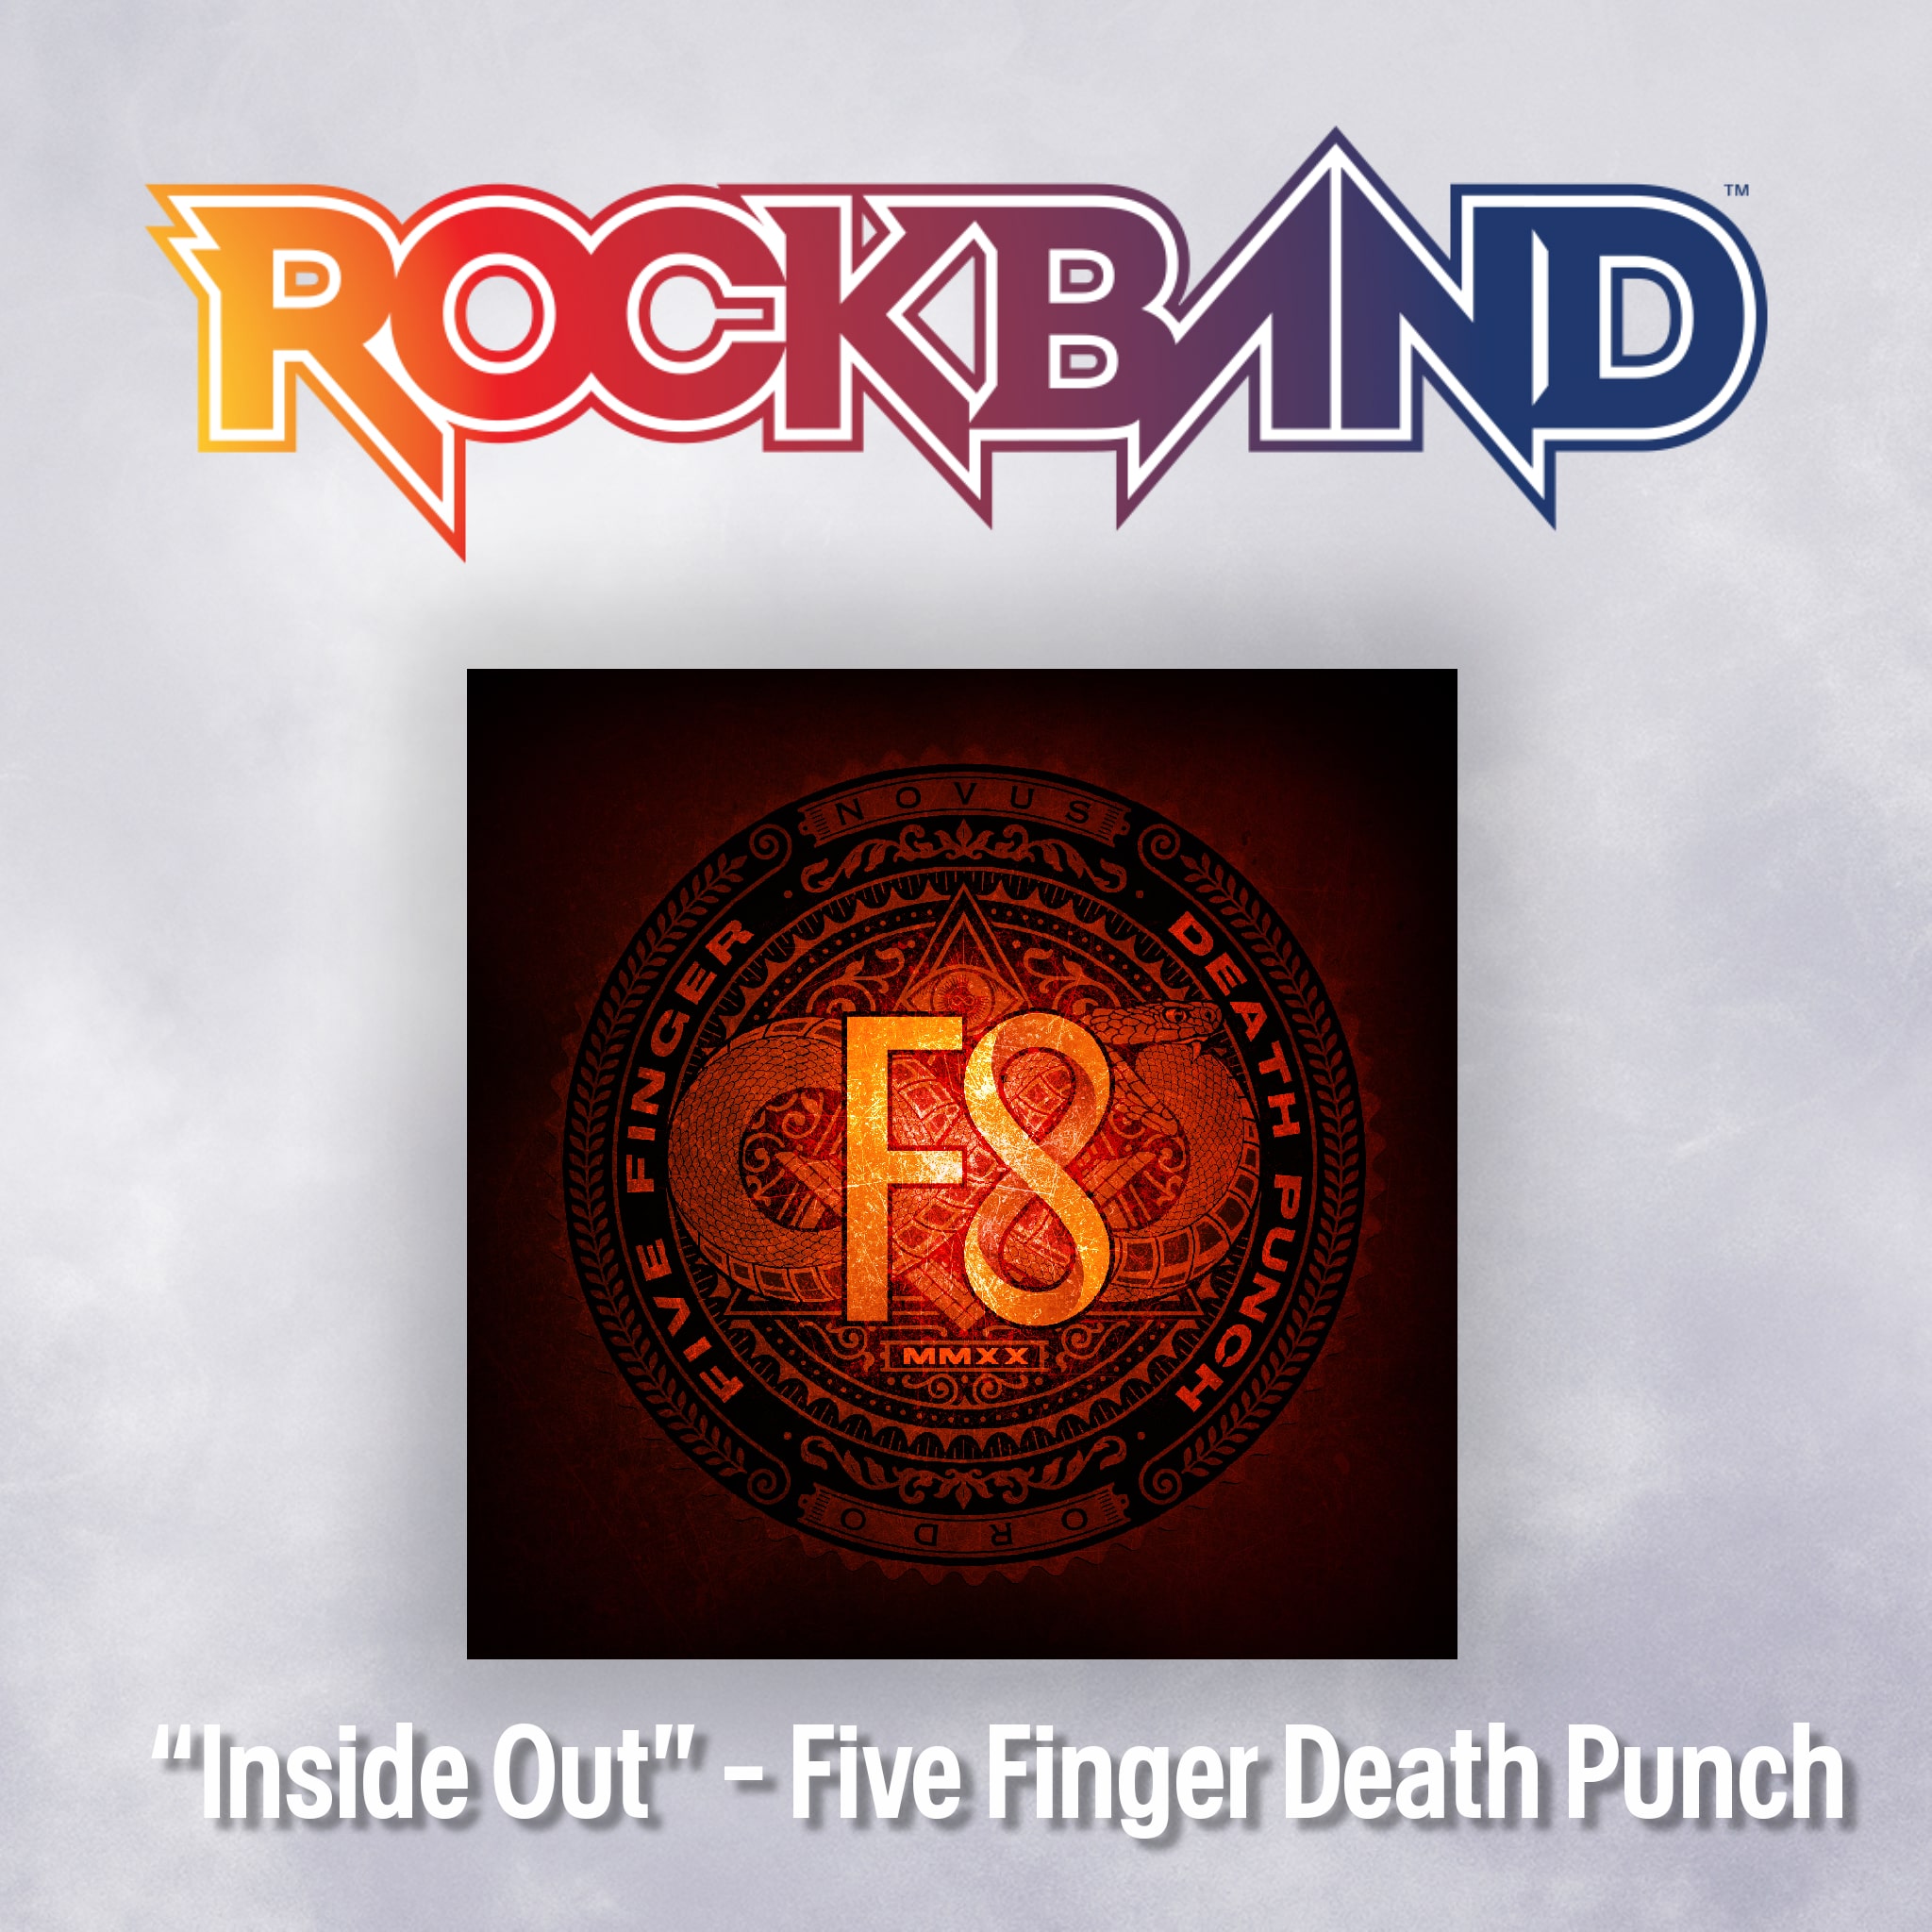  “Inside Out” - Five Finger Death Punch